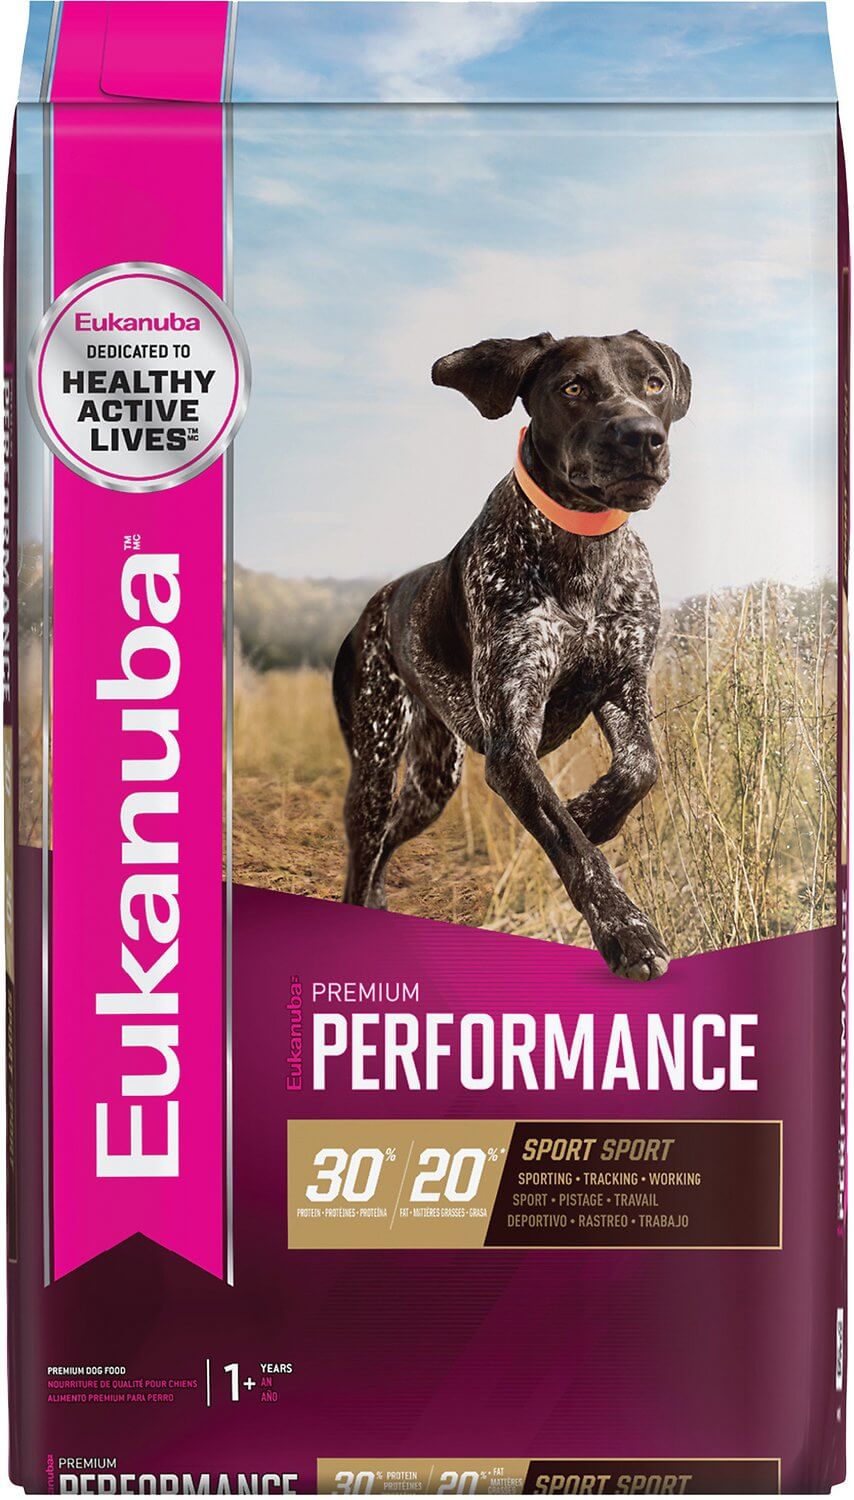 Eukanuba Premium Performance Dog Food 